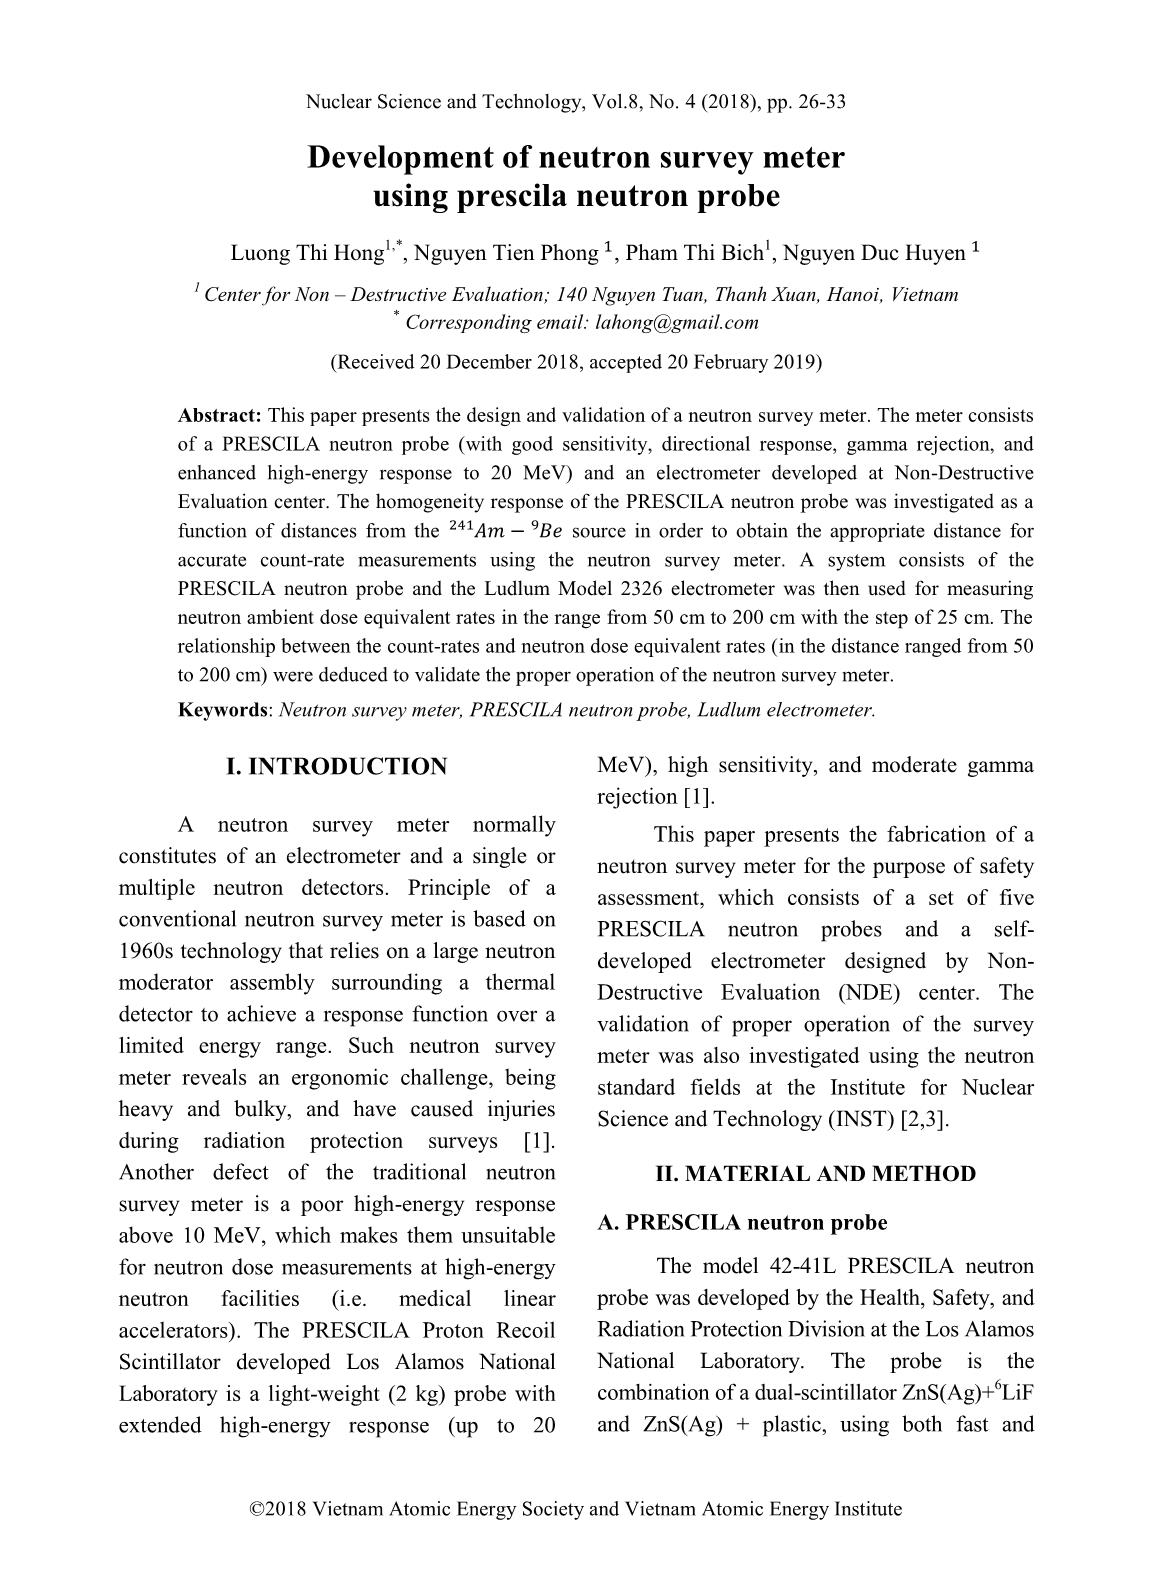 Development of neutron survey meter using prescila neutron probe trang 1